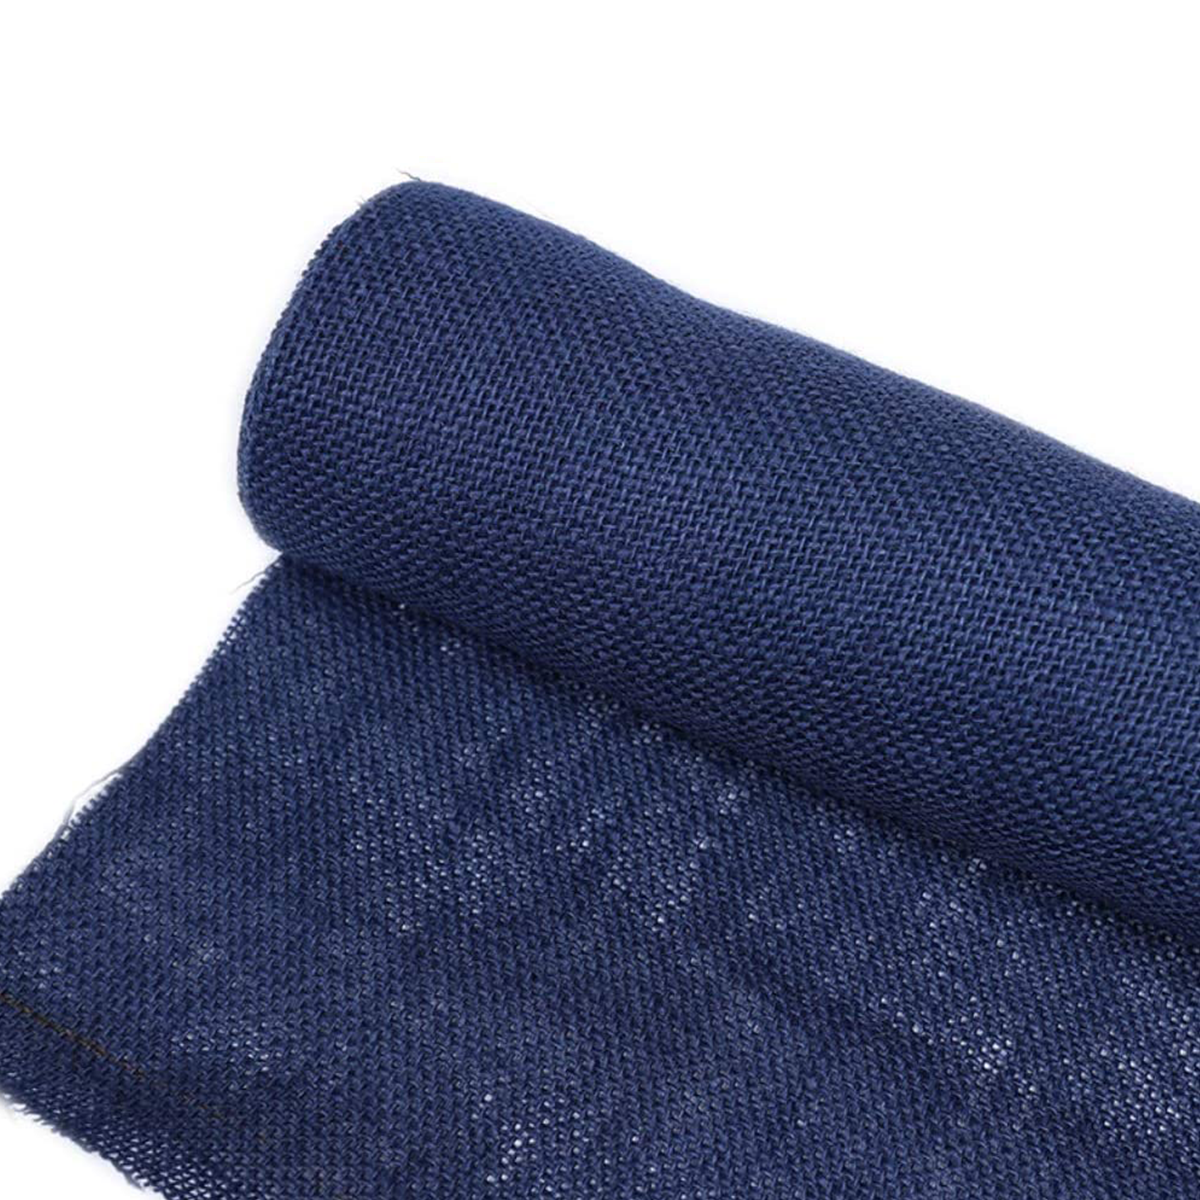 Jute Burlap Fabric Ribbon Roll DIY Sewing Craft Tablecloth Home Decor - Navy Blue